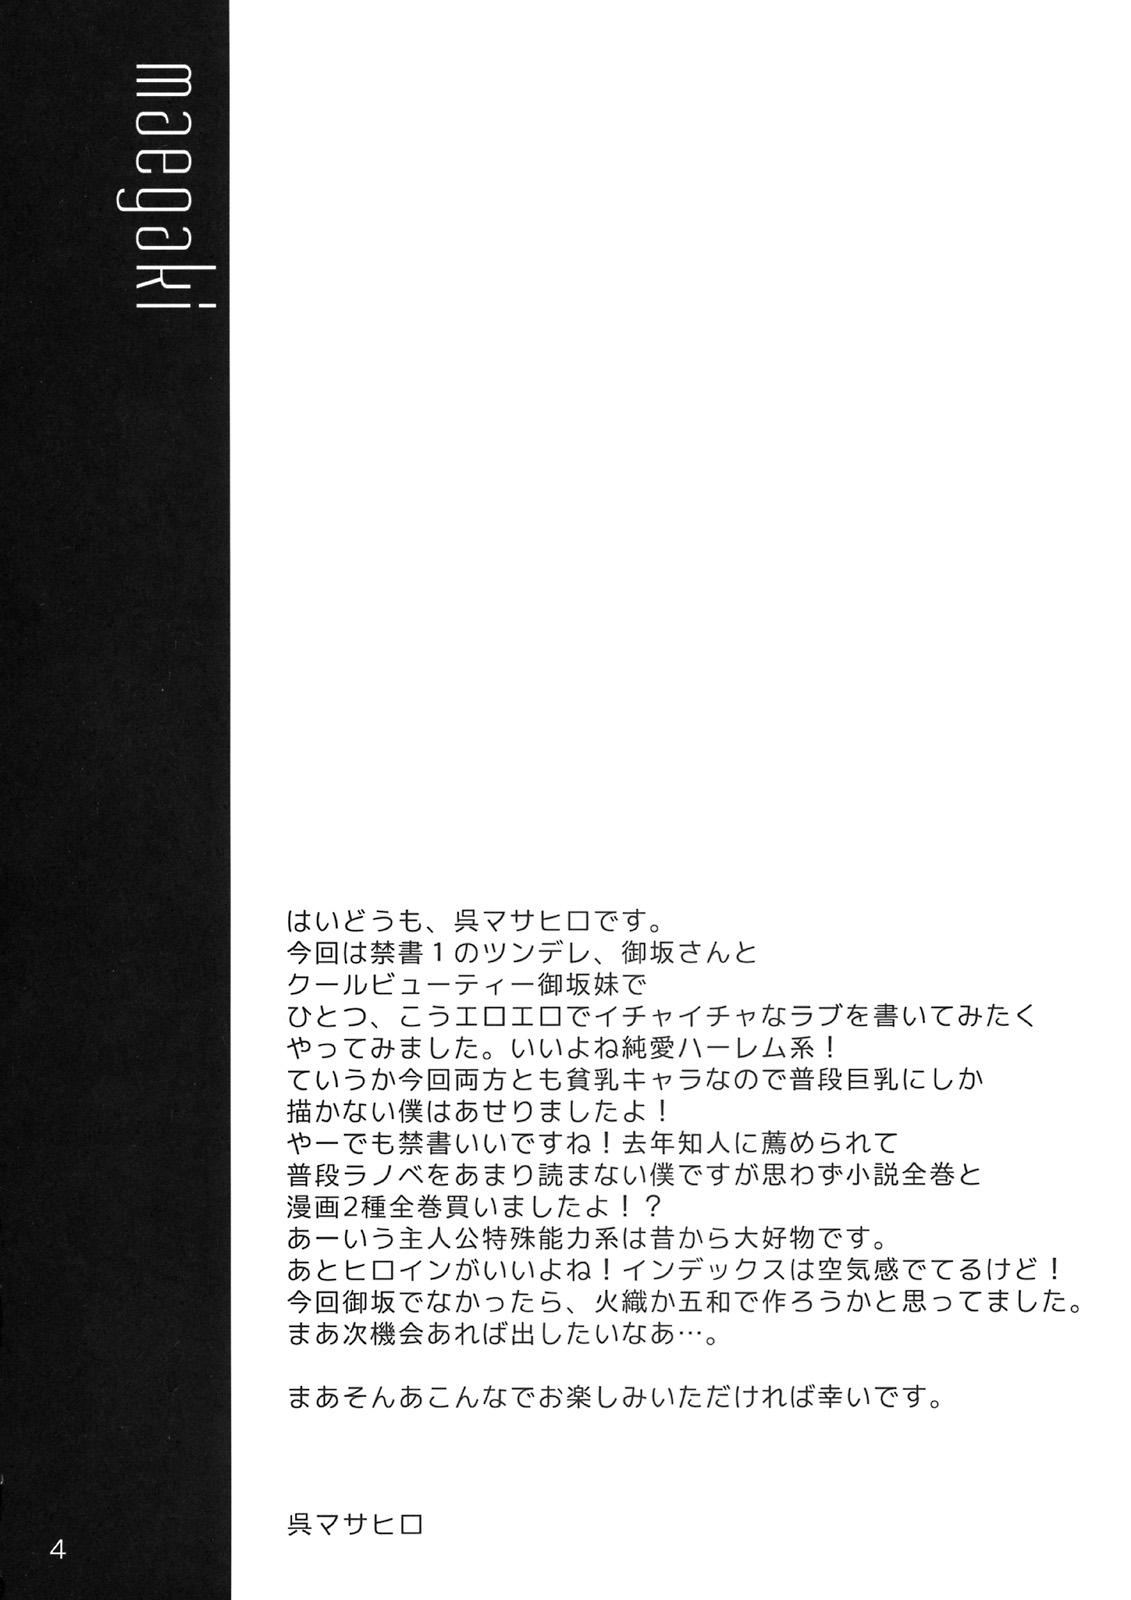 Perfect Ass CL-ic #4 - Toaru majutsu no index Puba - Page 3